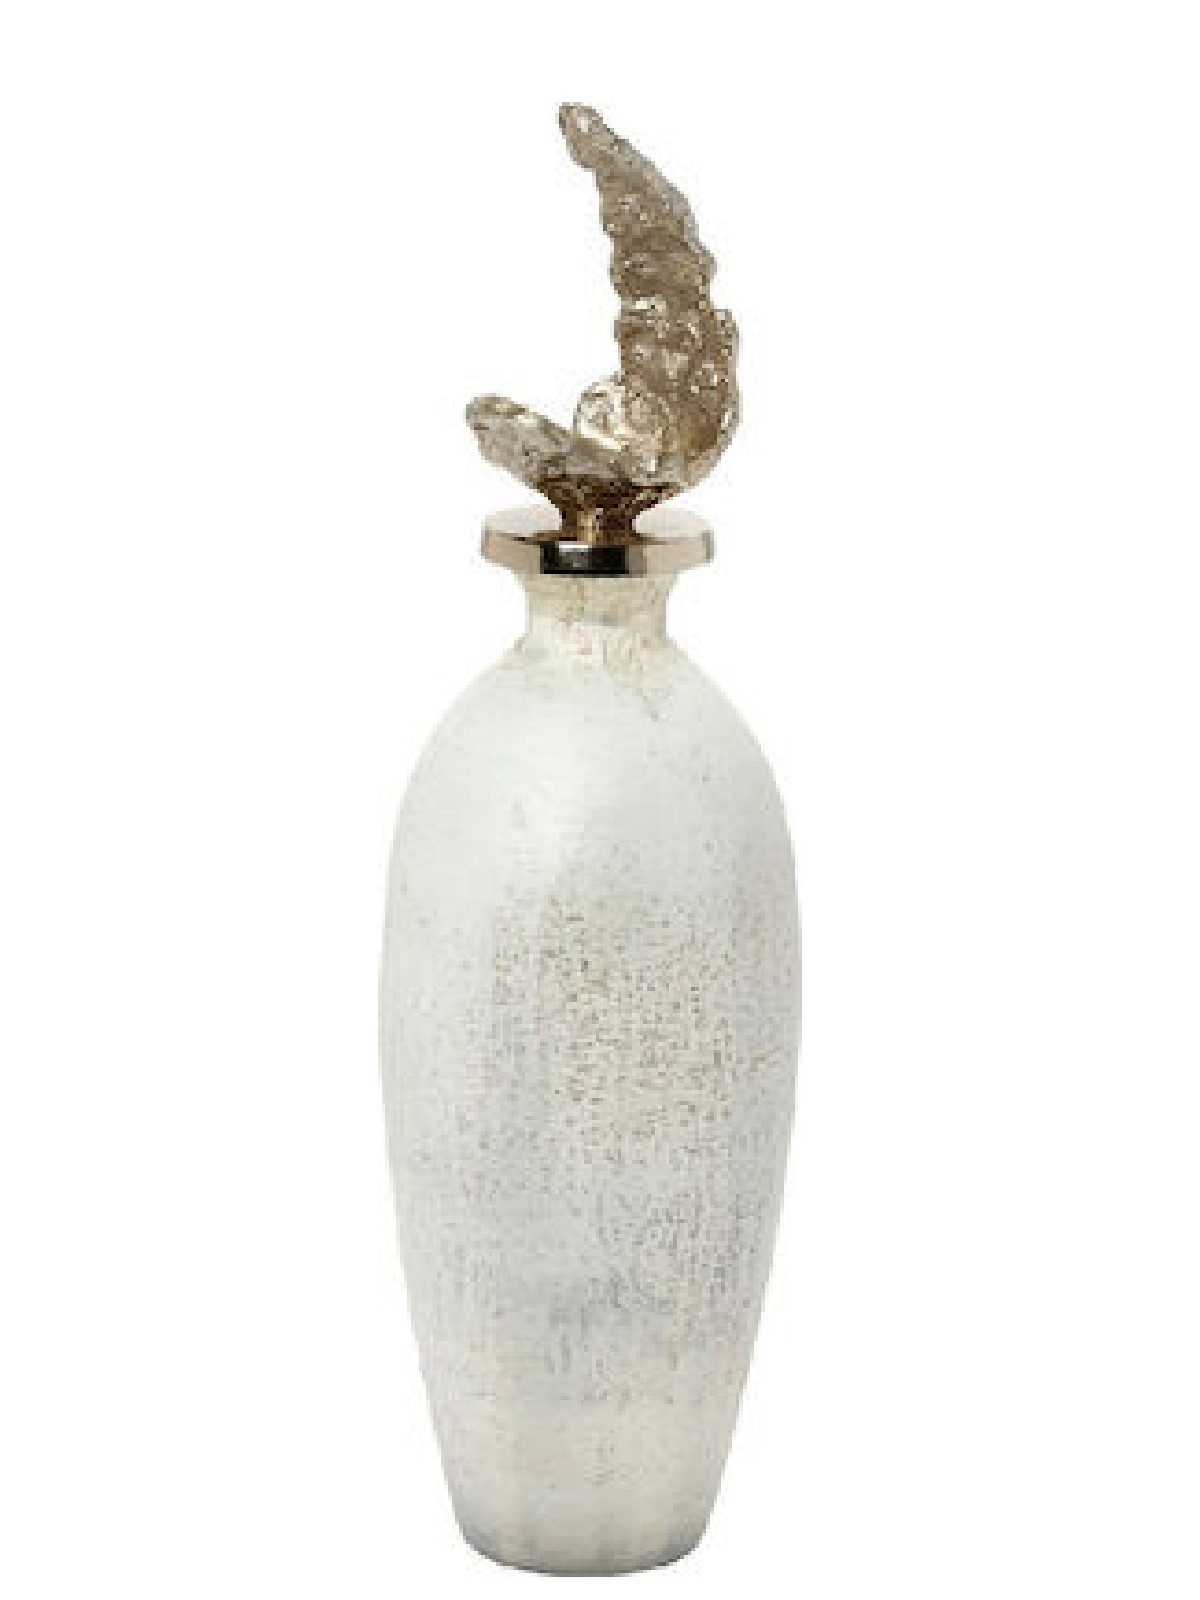 Decorative glass bottle/vase